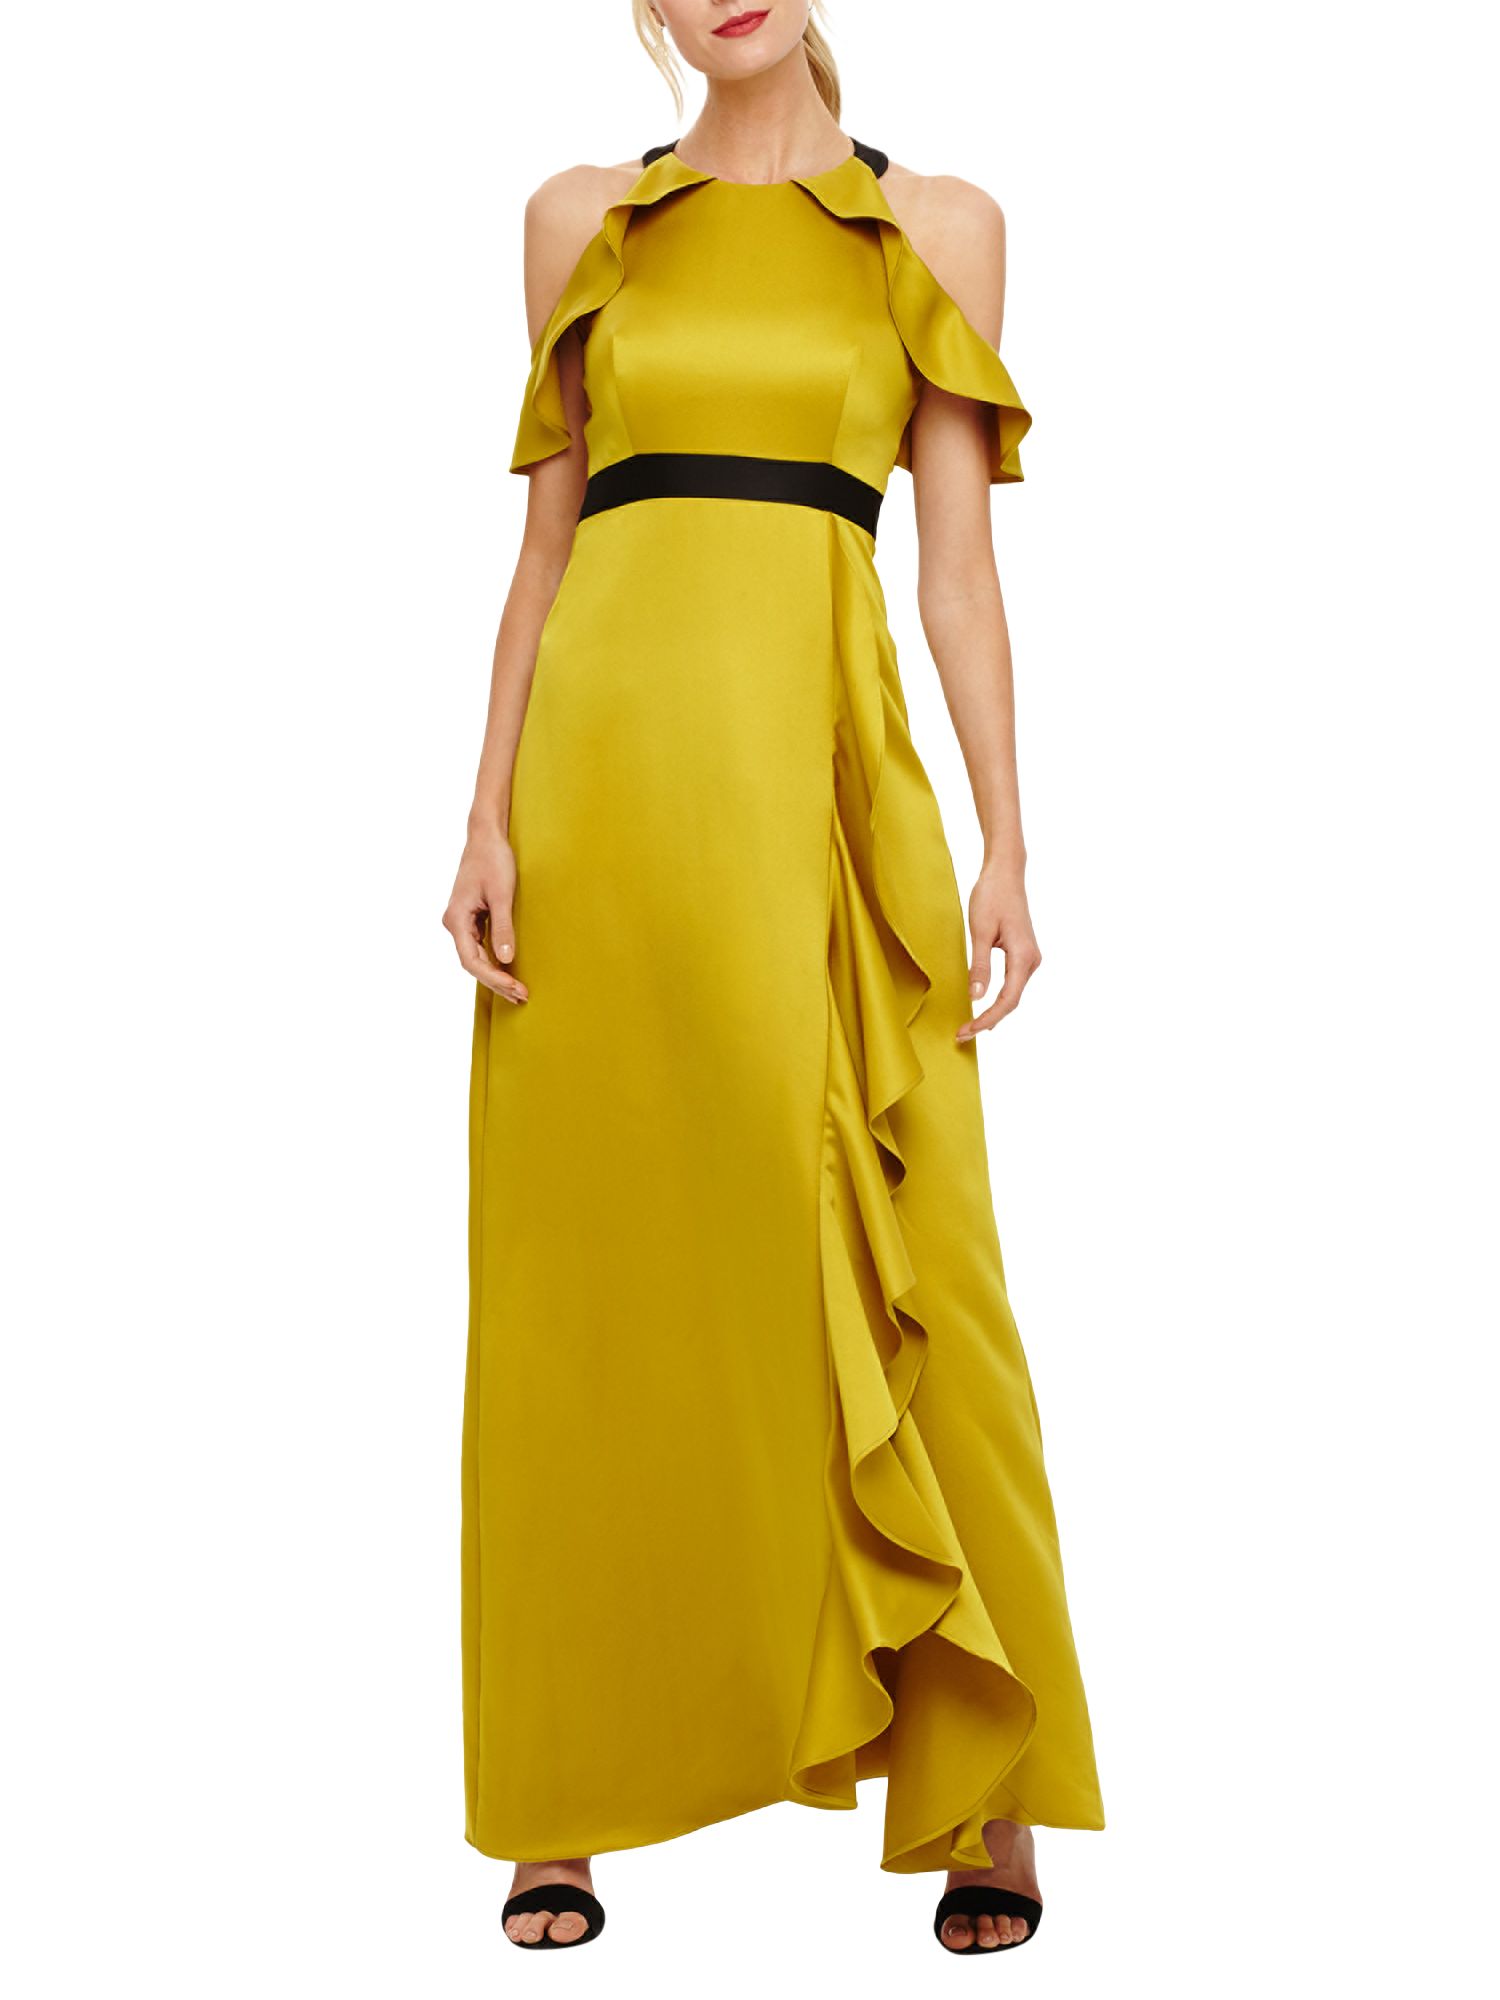 Phase Eight Cezanna Maxi Dress, Chartreuse